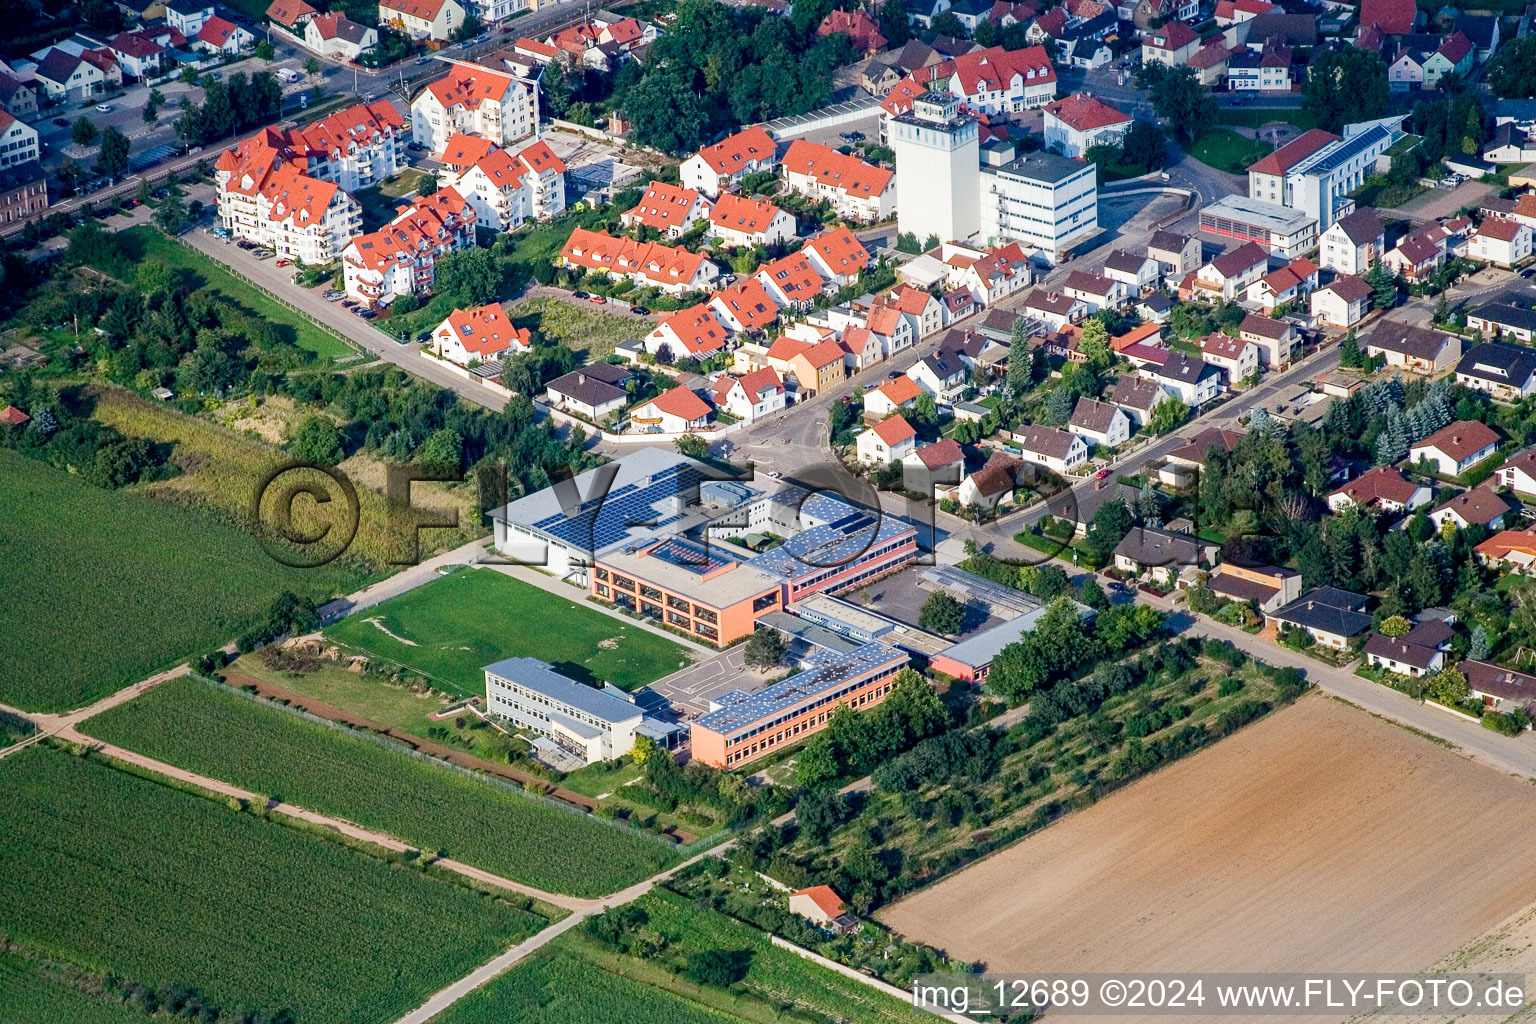 School building of the Karl-Wendel-Schule Lambsheim in Lambsheim in the state Rhineland-Palatinate, Germany